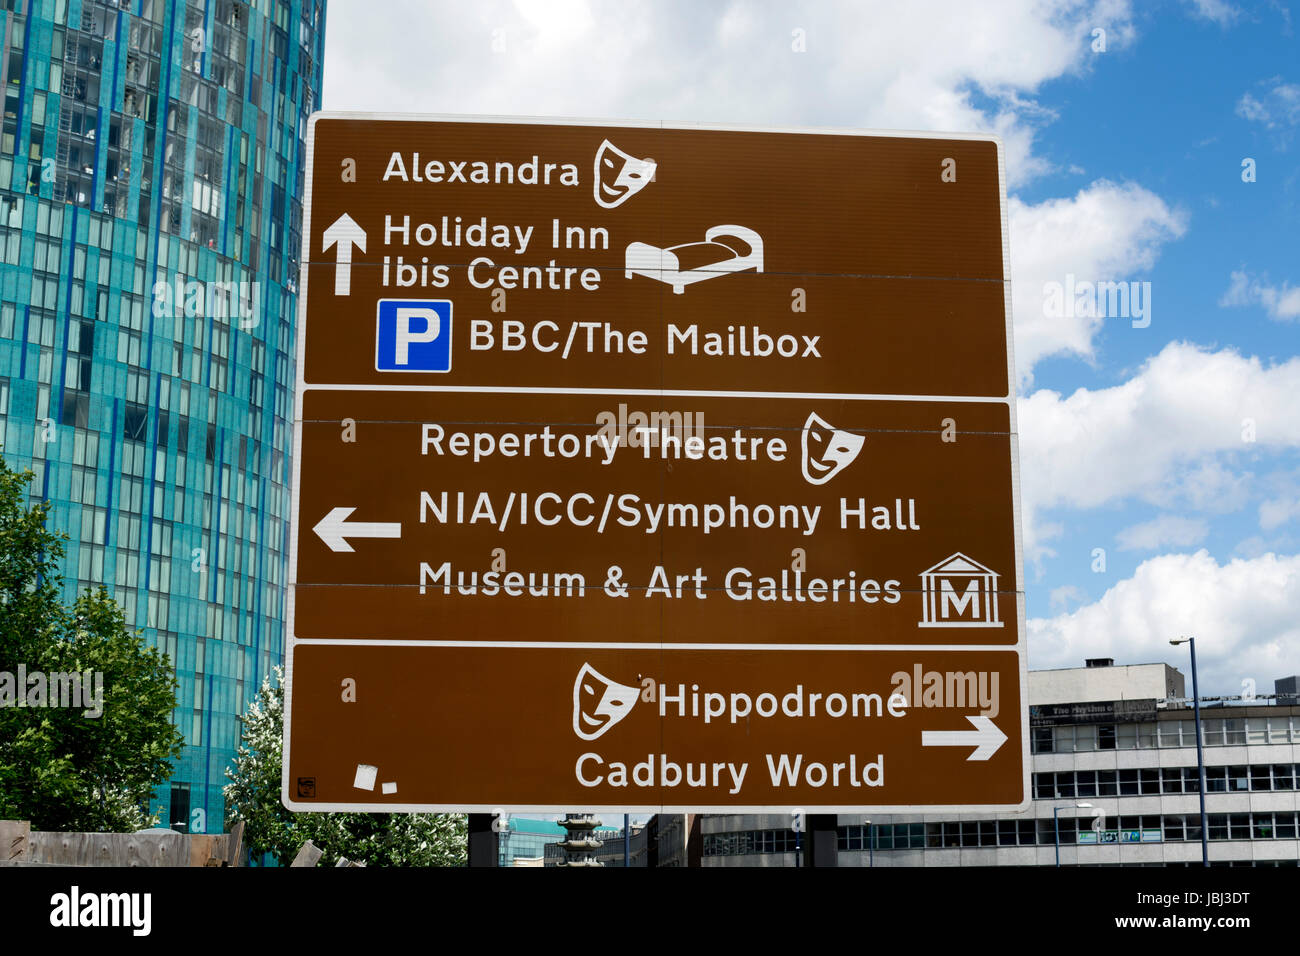 Recreational attractions road sign, Birmingham city centre, UK Stock Photo